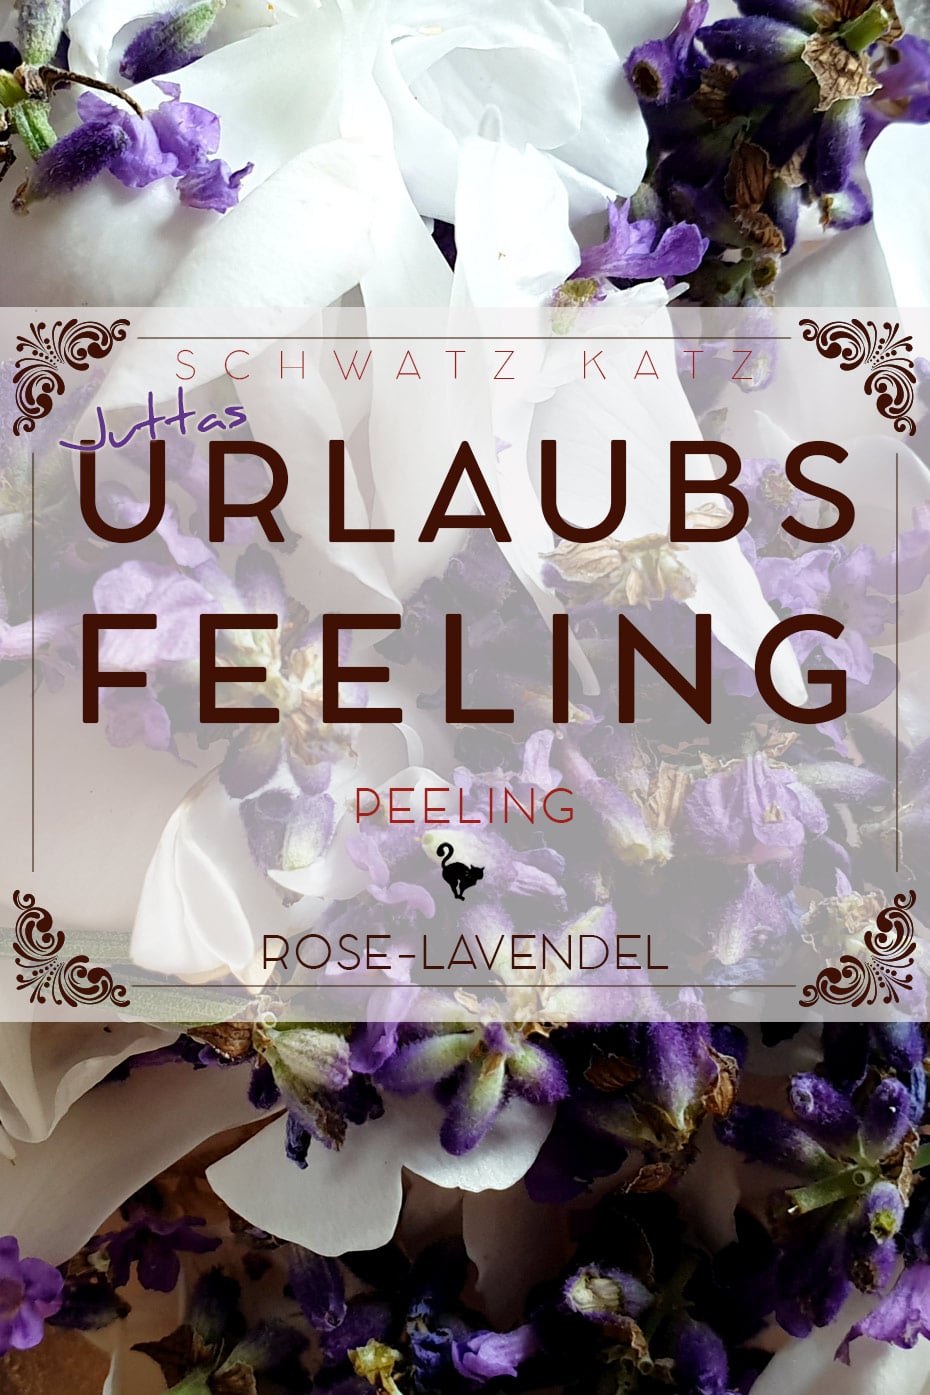 Urlaubsfeeling Peeling Rose-Lavendel | Schwatz Katz